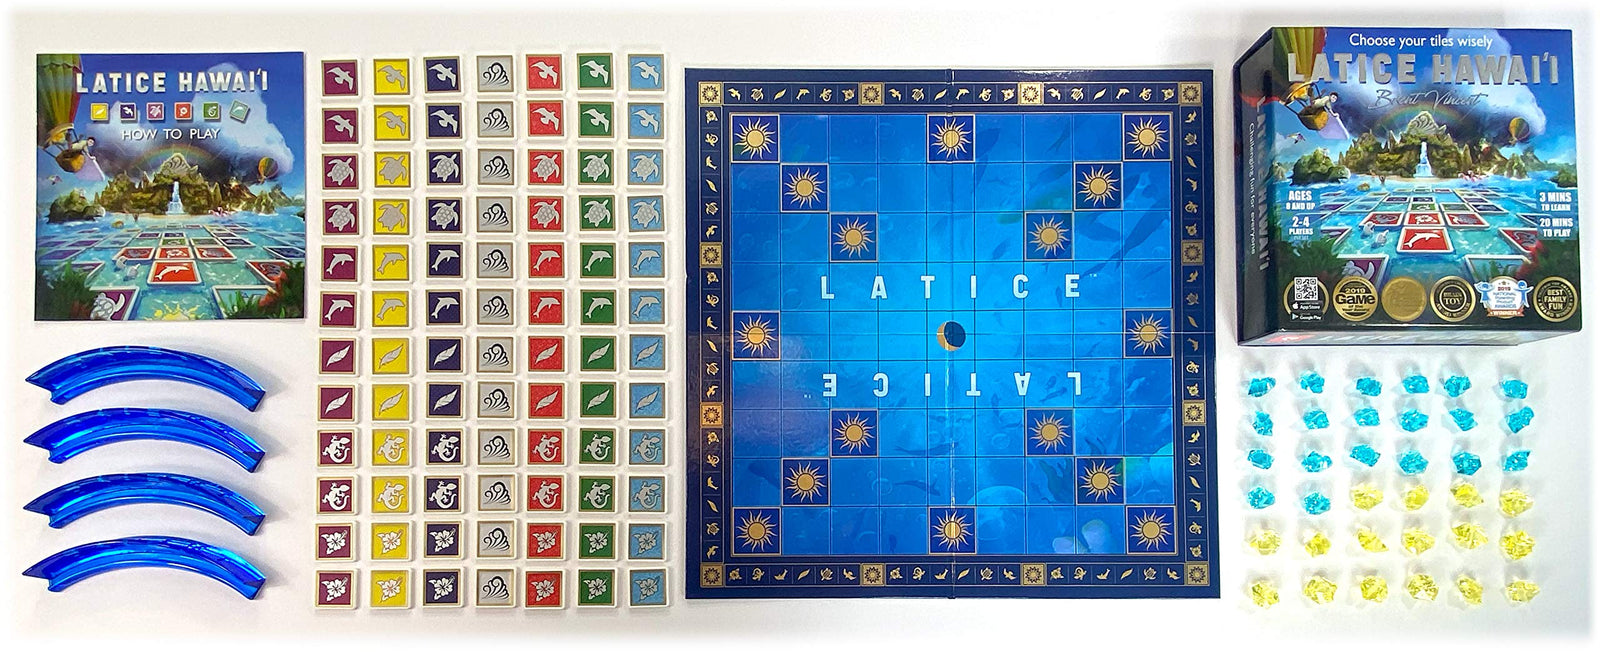 Latice Hawaii Strategy Board Game - The Multi-Award-Winning Smart New Family Board Game. Intelligent Fun for Creative People.